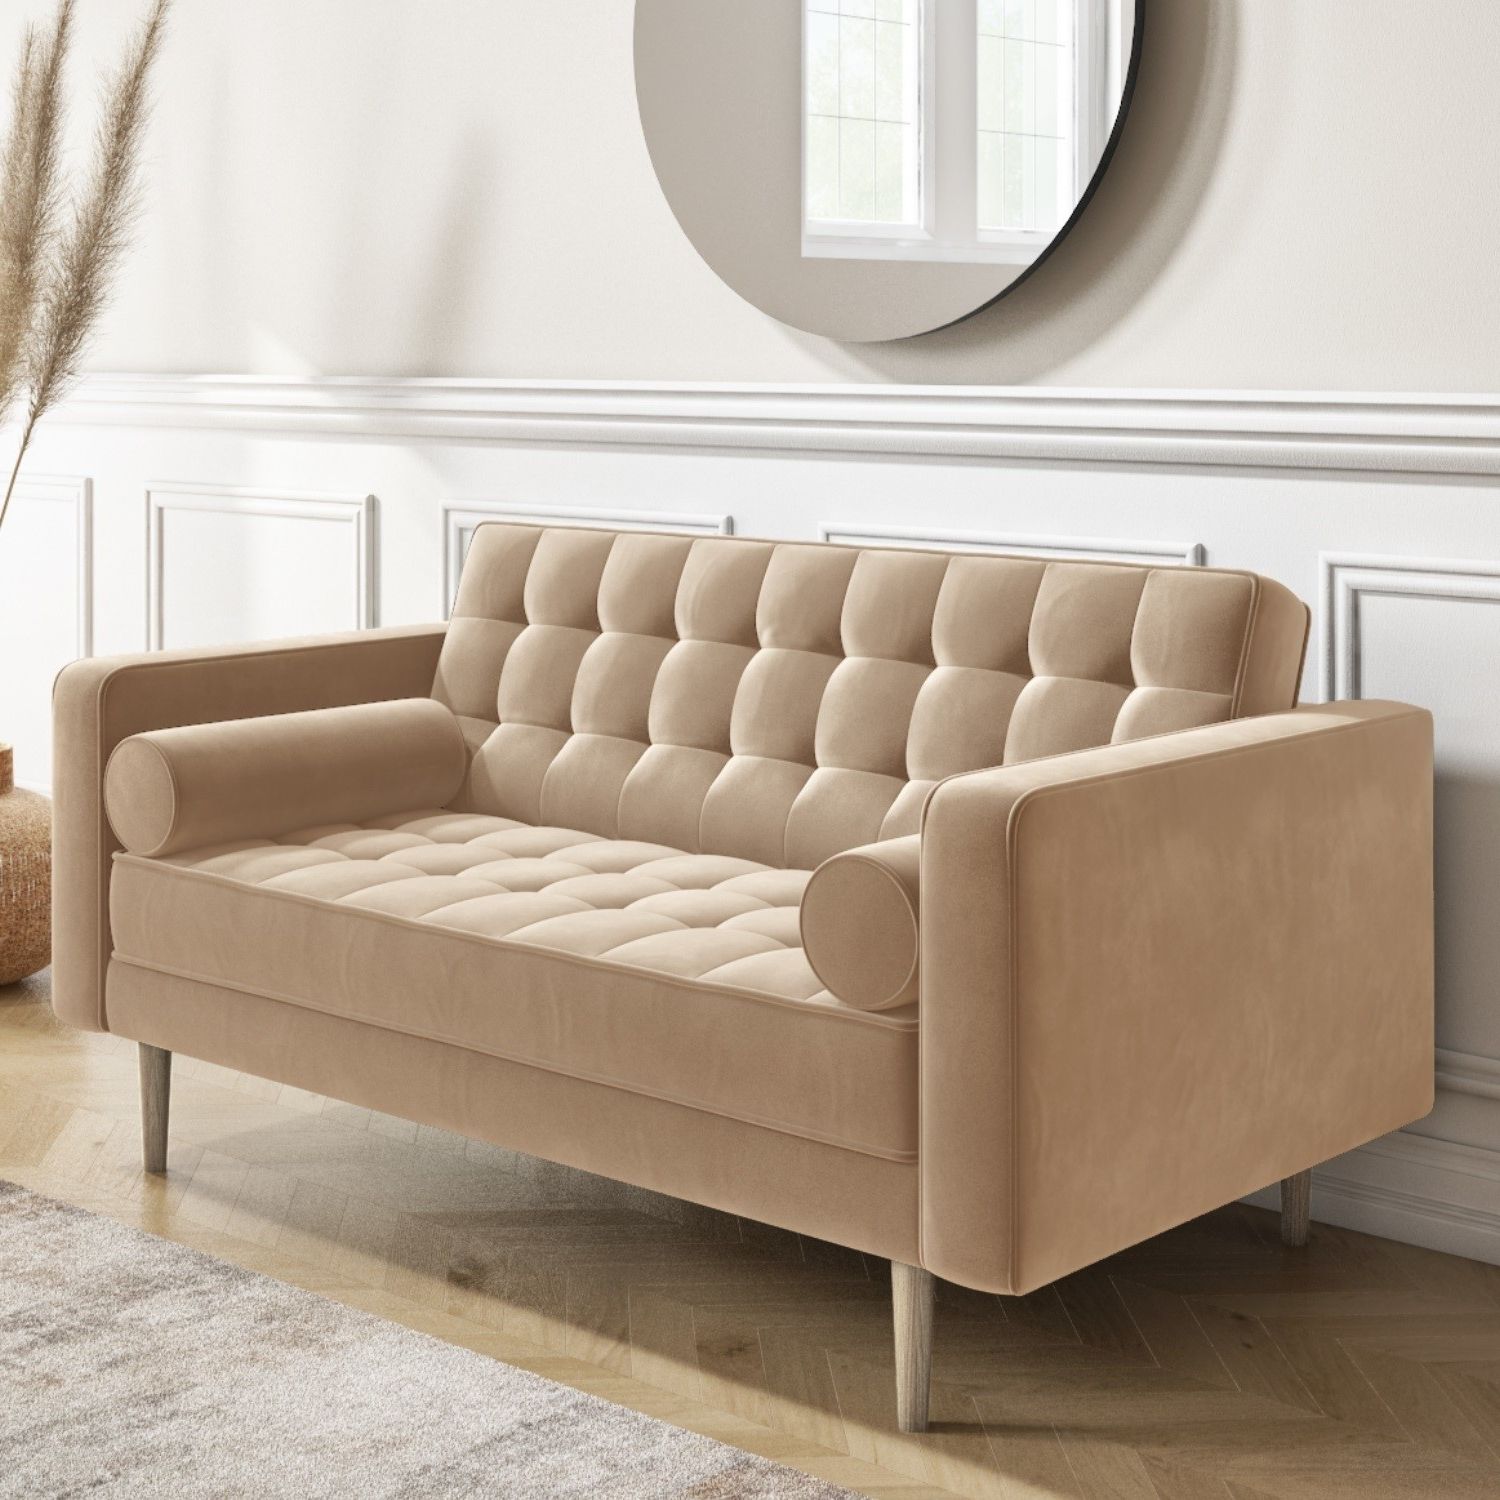 Beige Velvet 2 Seater Quilted Mid Century Sofa – Elba – Furniture123 With Regard To Current Elegant Beige Velvet Sofas (Photo 8 of 15)